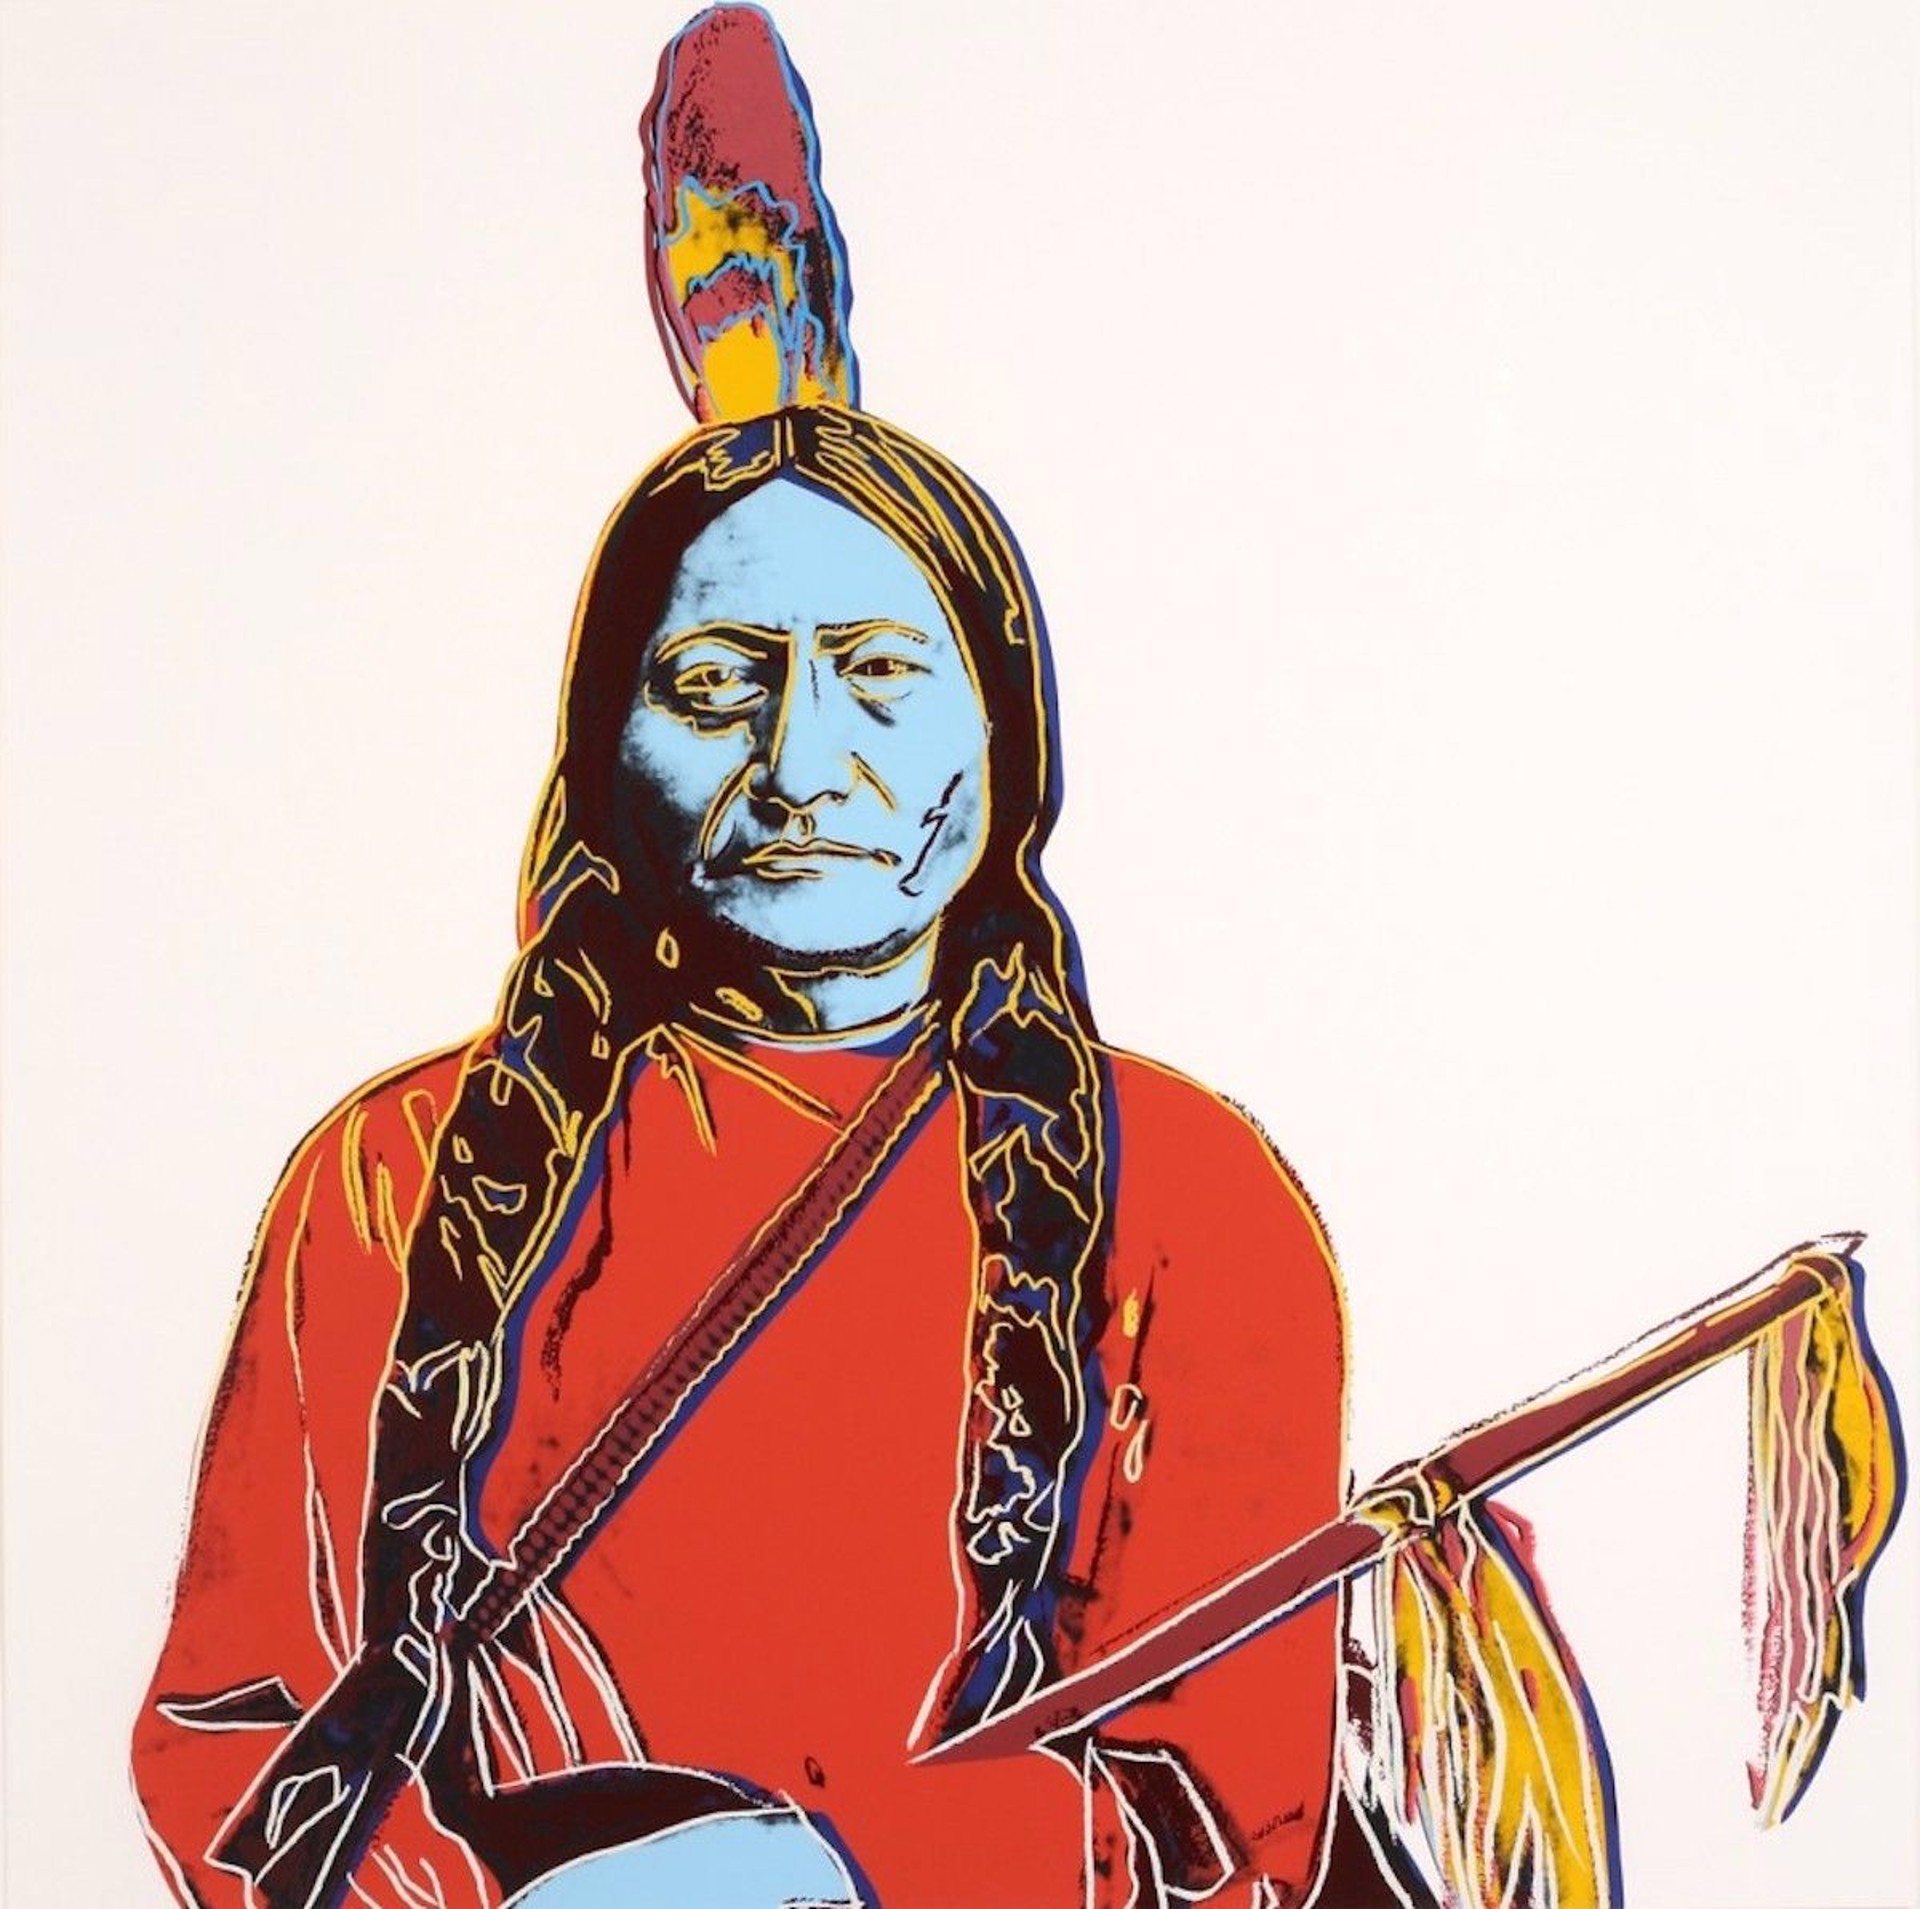 Sitting Bull by Andy Warhol